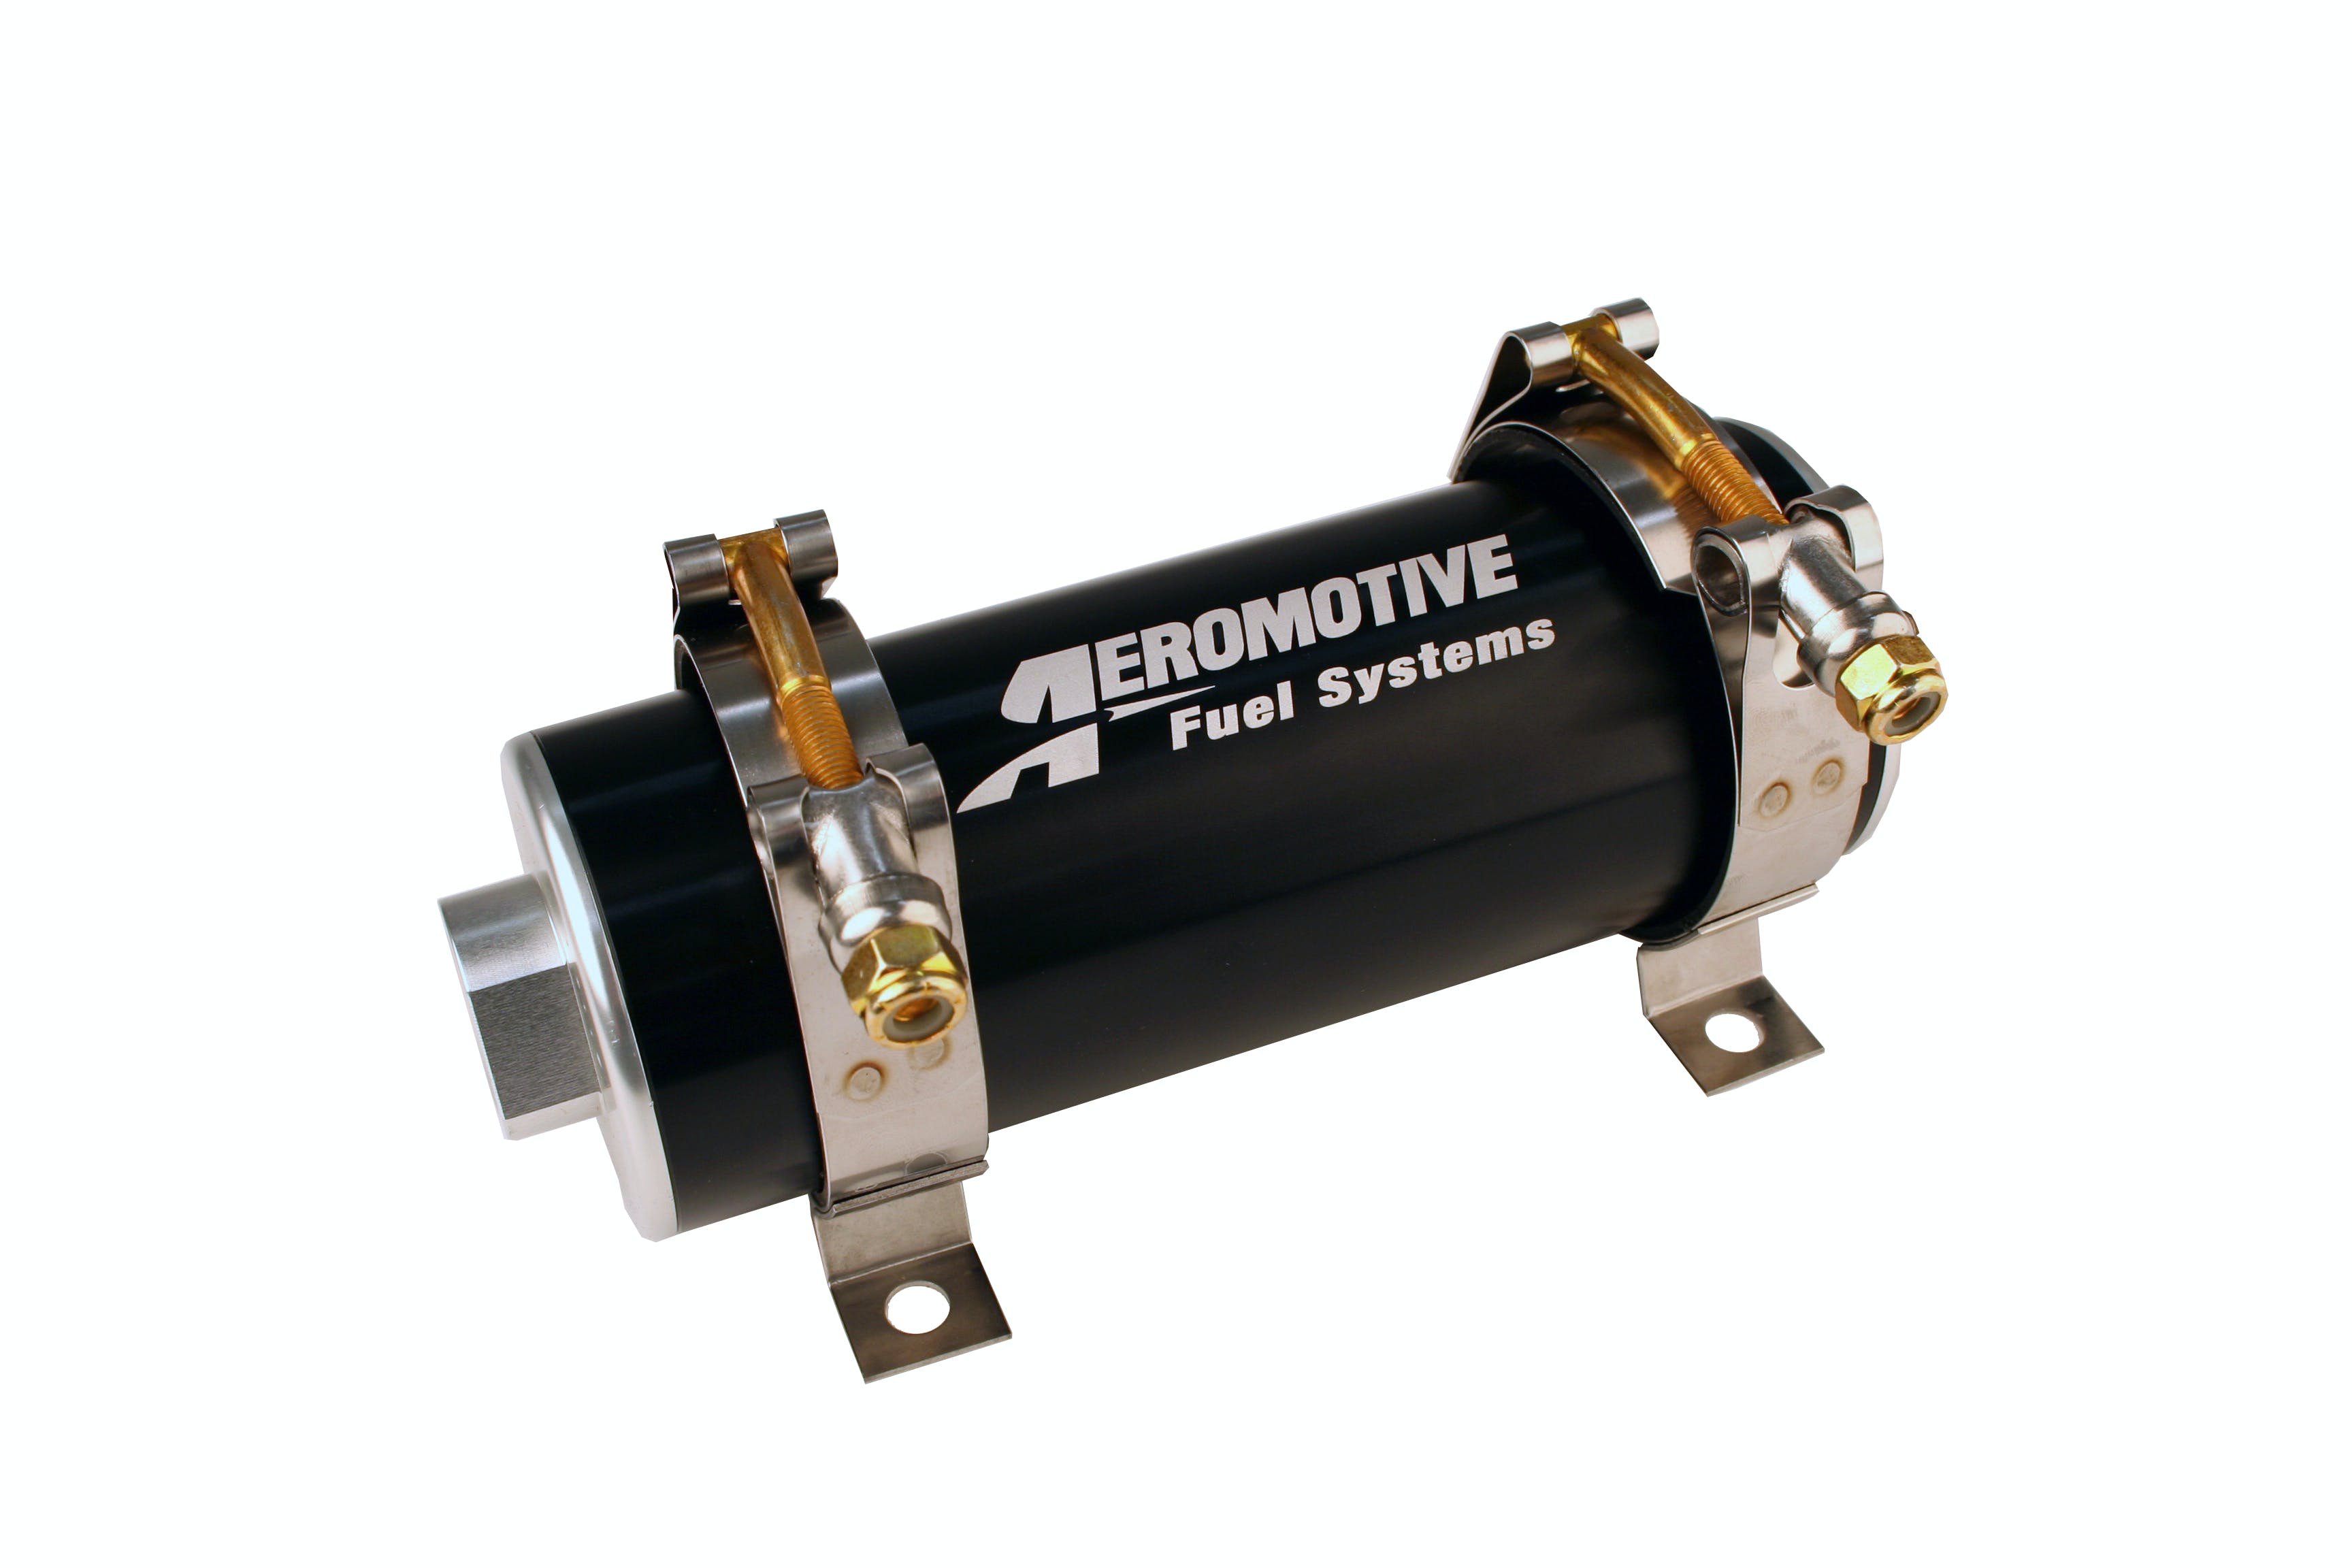 Aeromotive Fuel System 11103 700 HP EFI Fuel Pump - Black